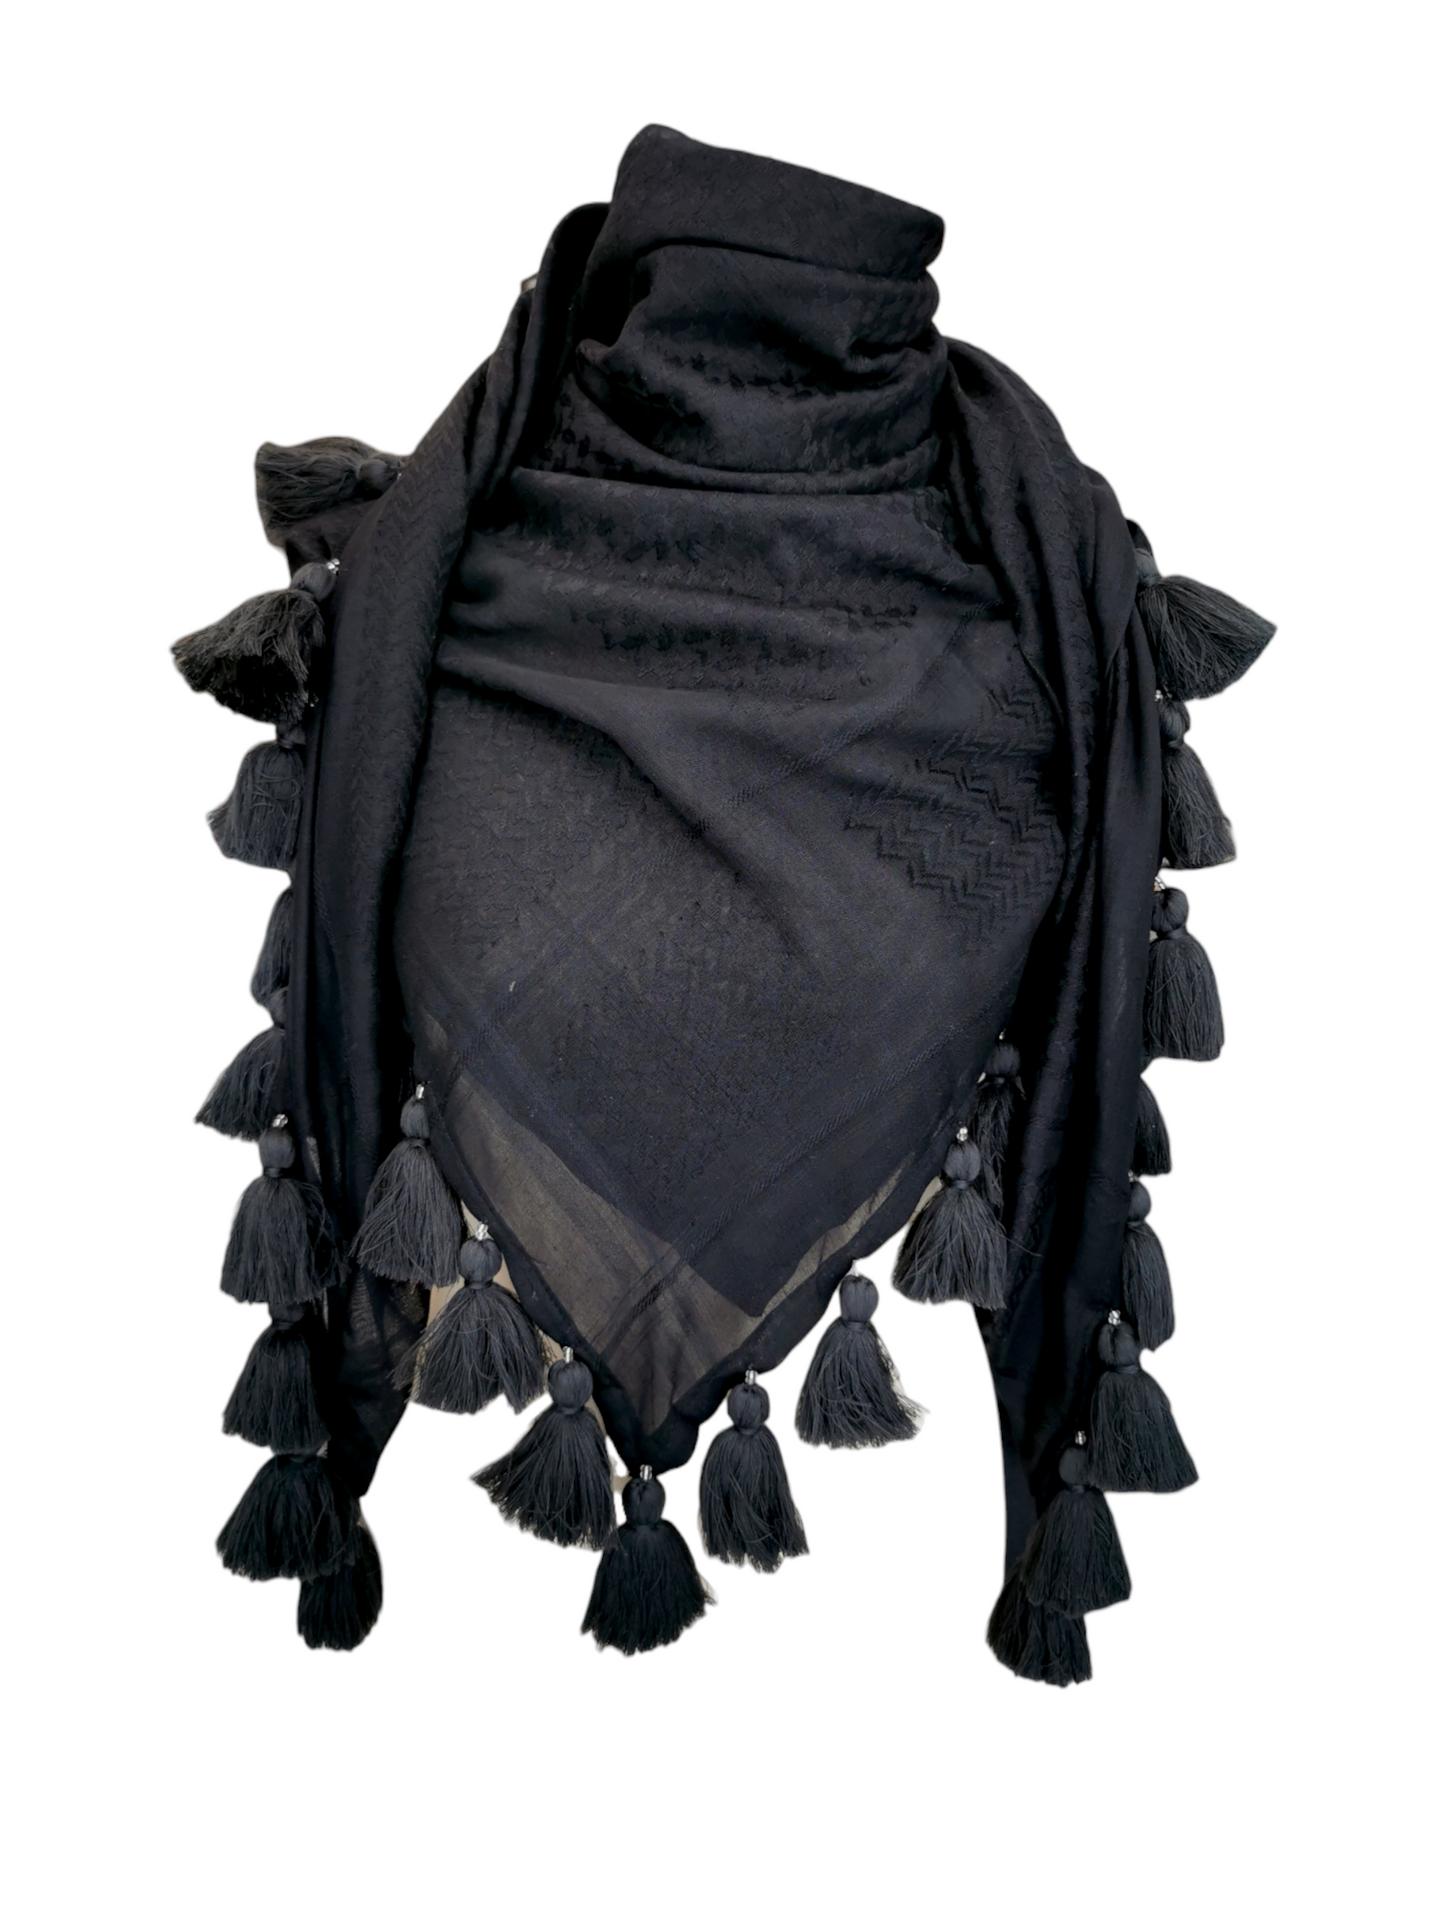 Basic Black Hatta with black tassels